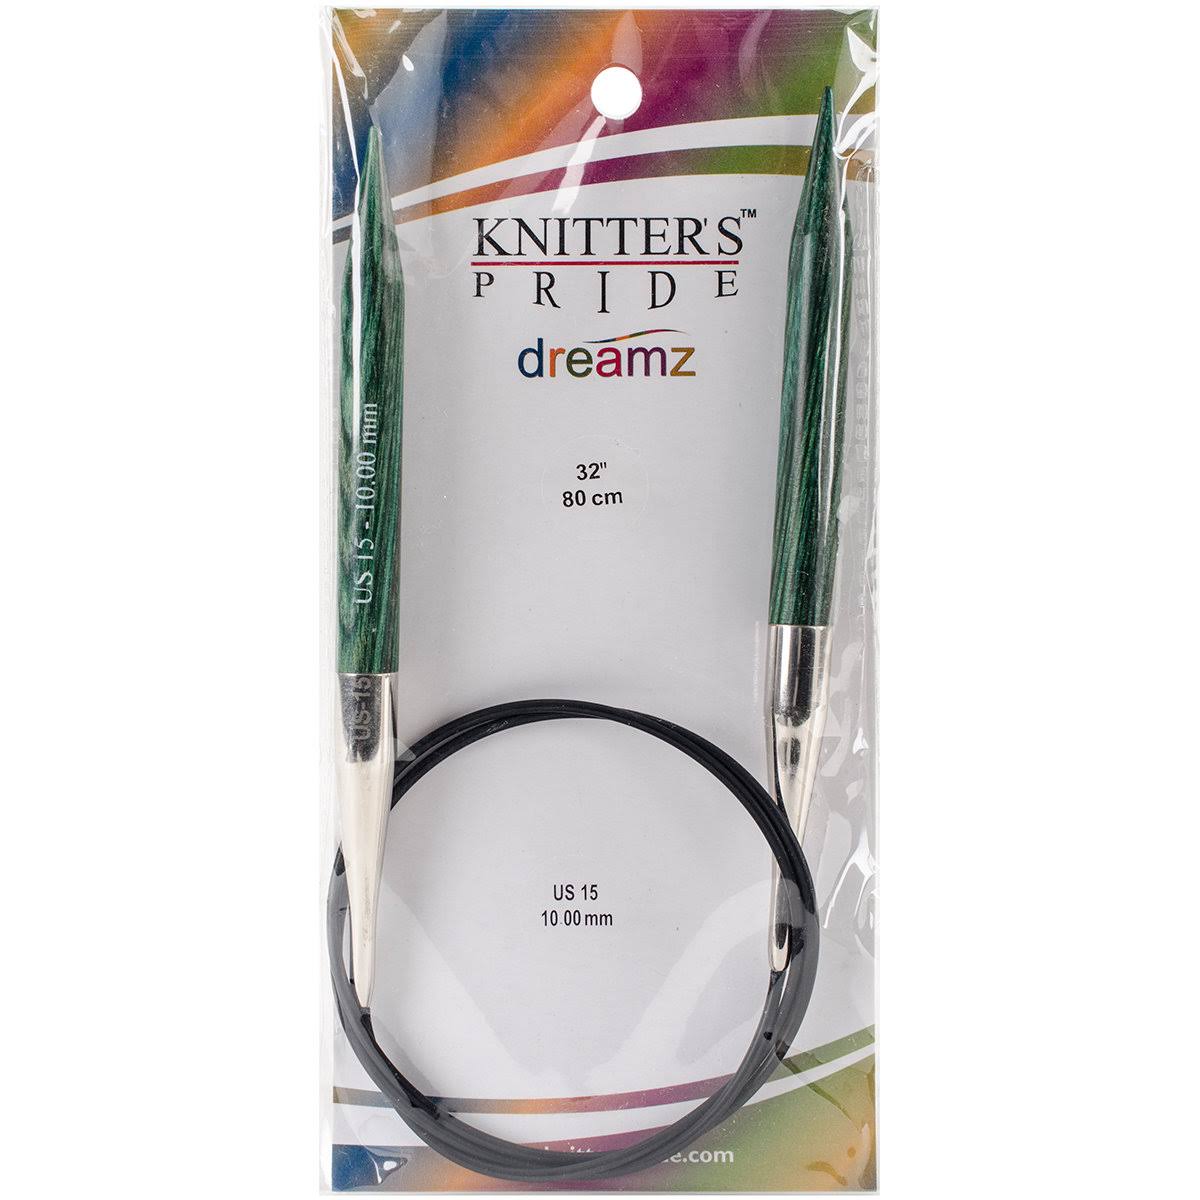 Knitters Pride Dreamz Circular Knitting Needles - 32"